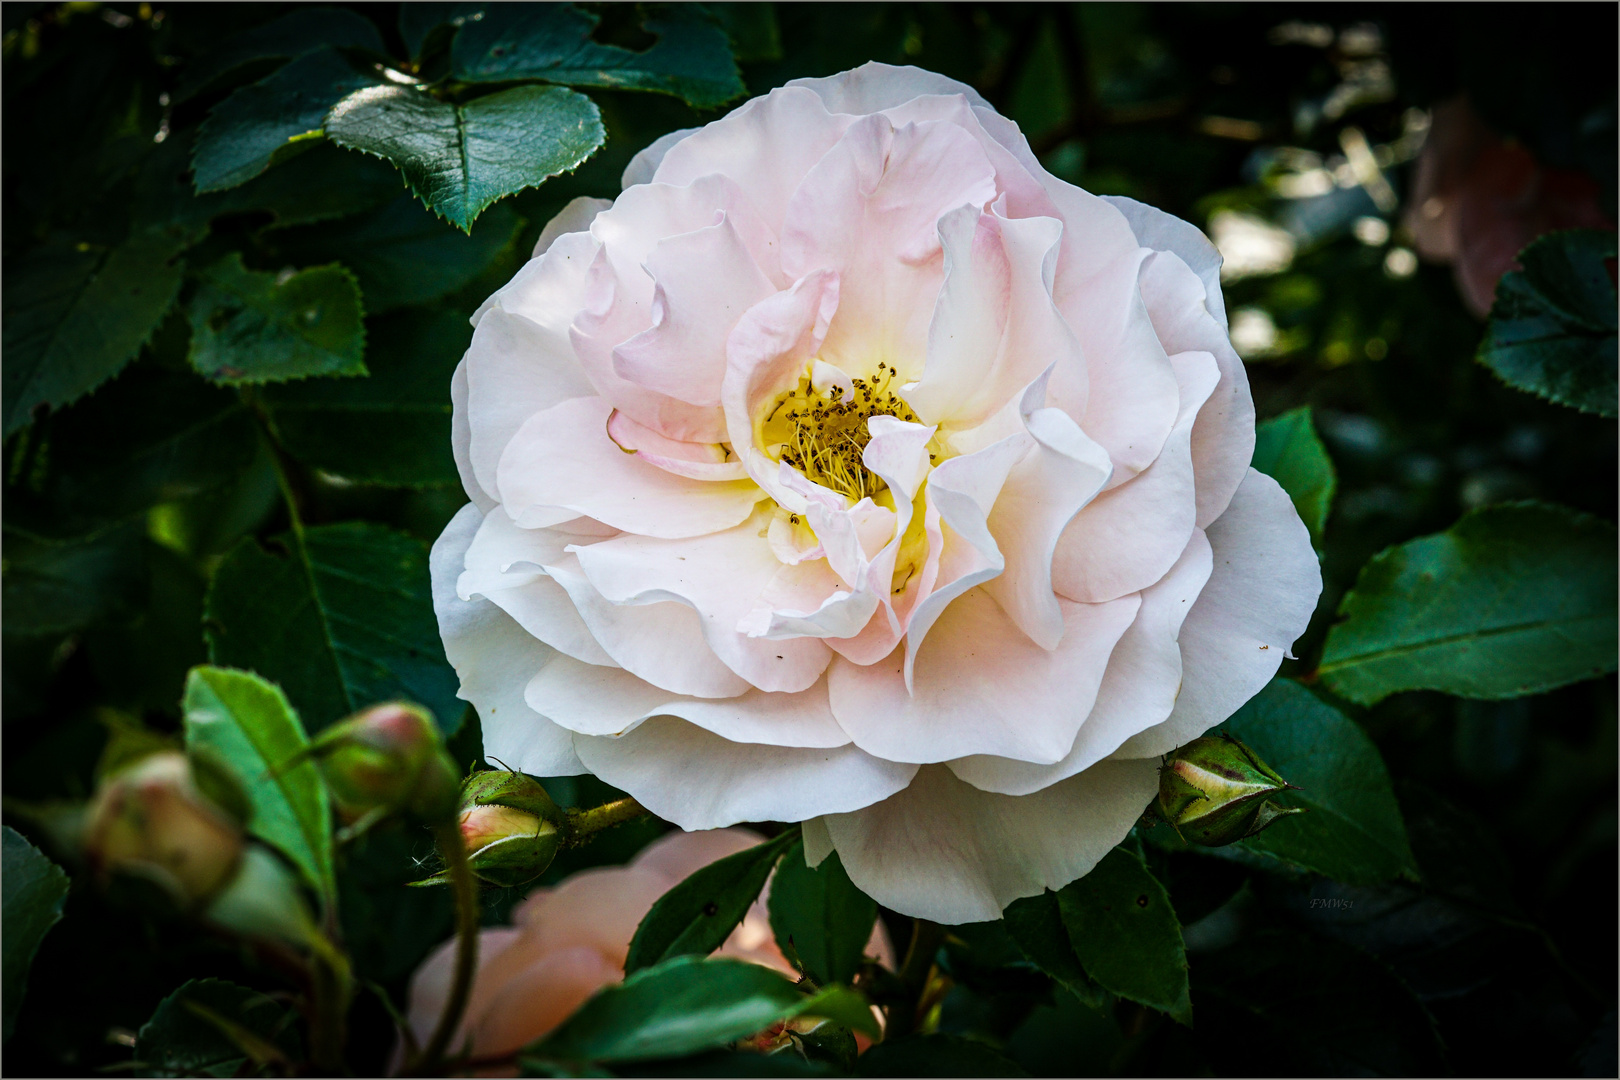 A delicate pastel rose blossom